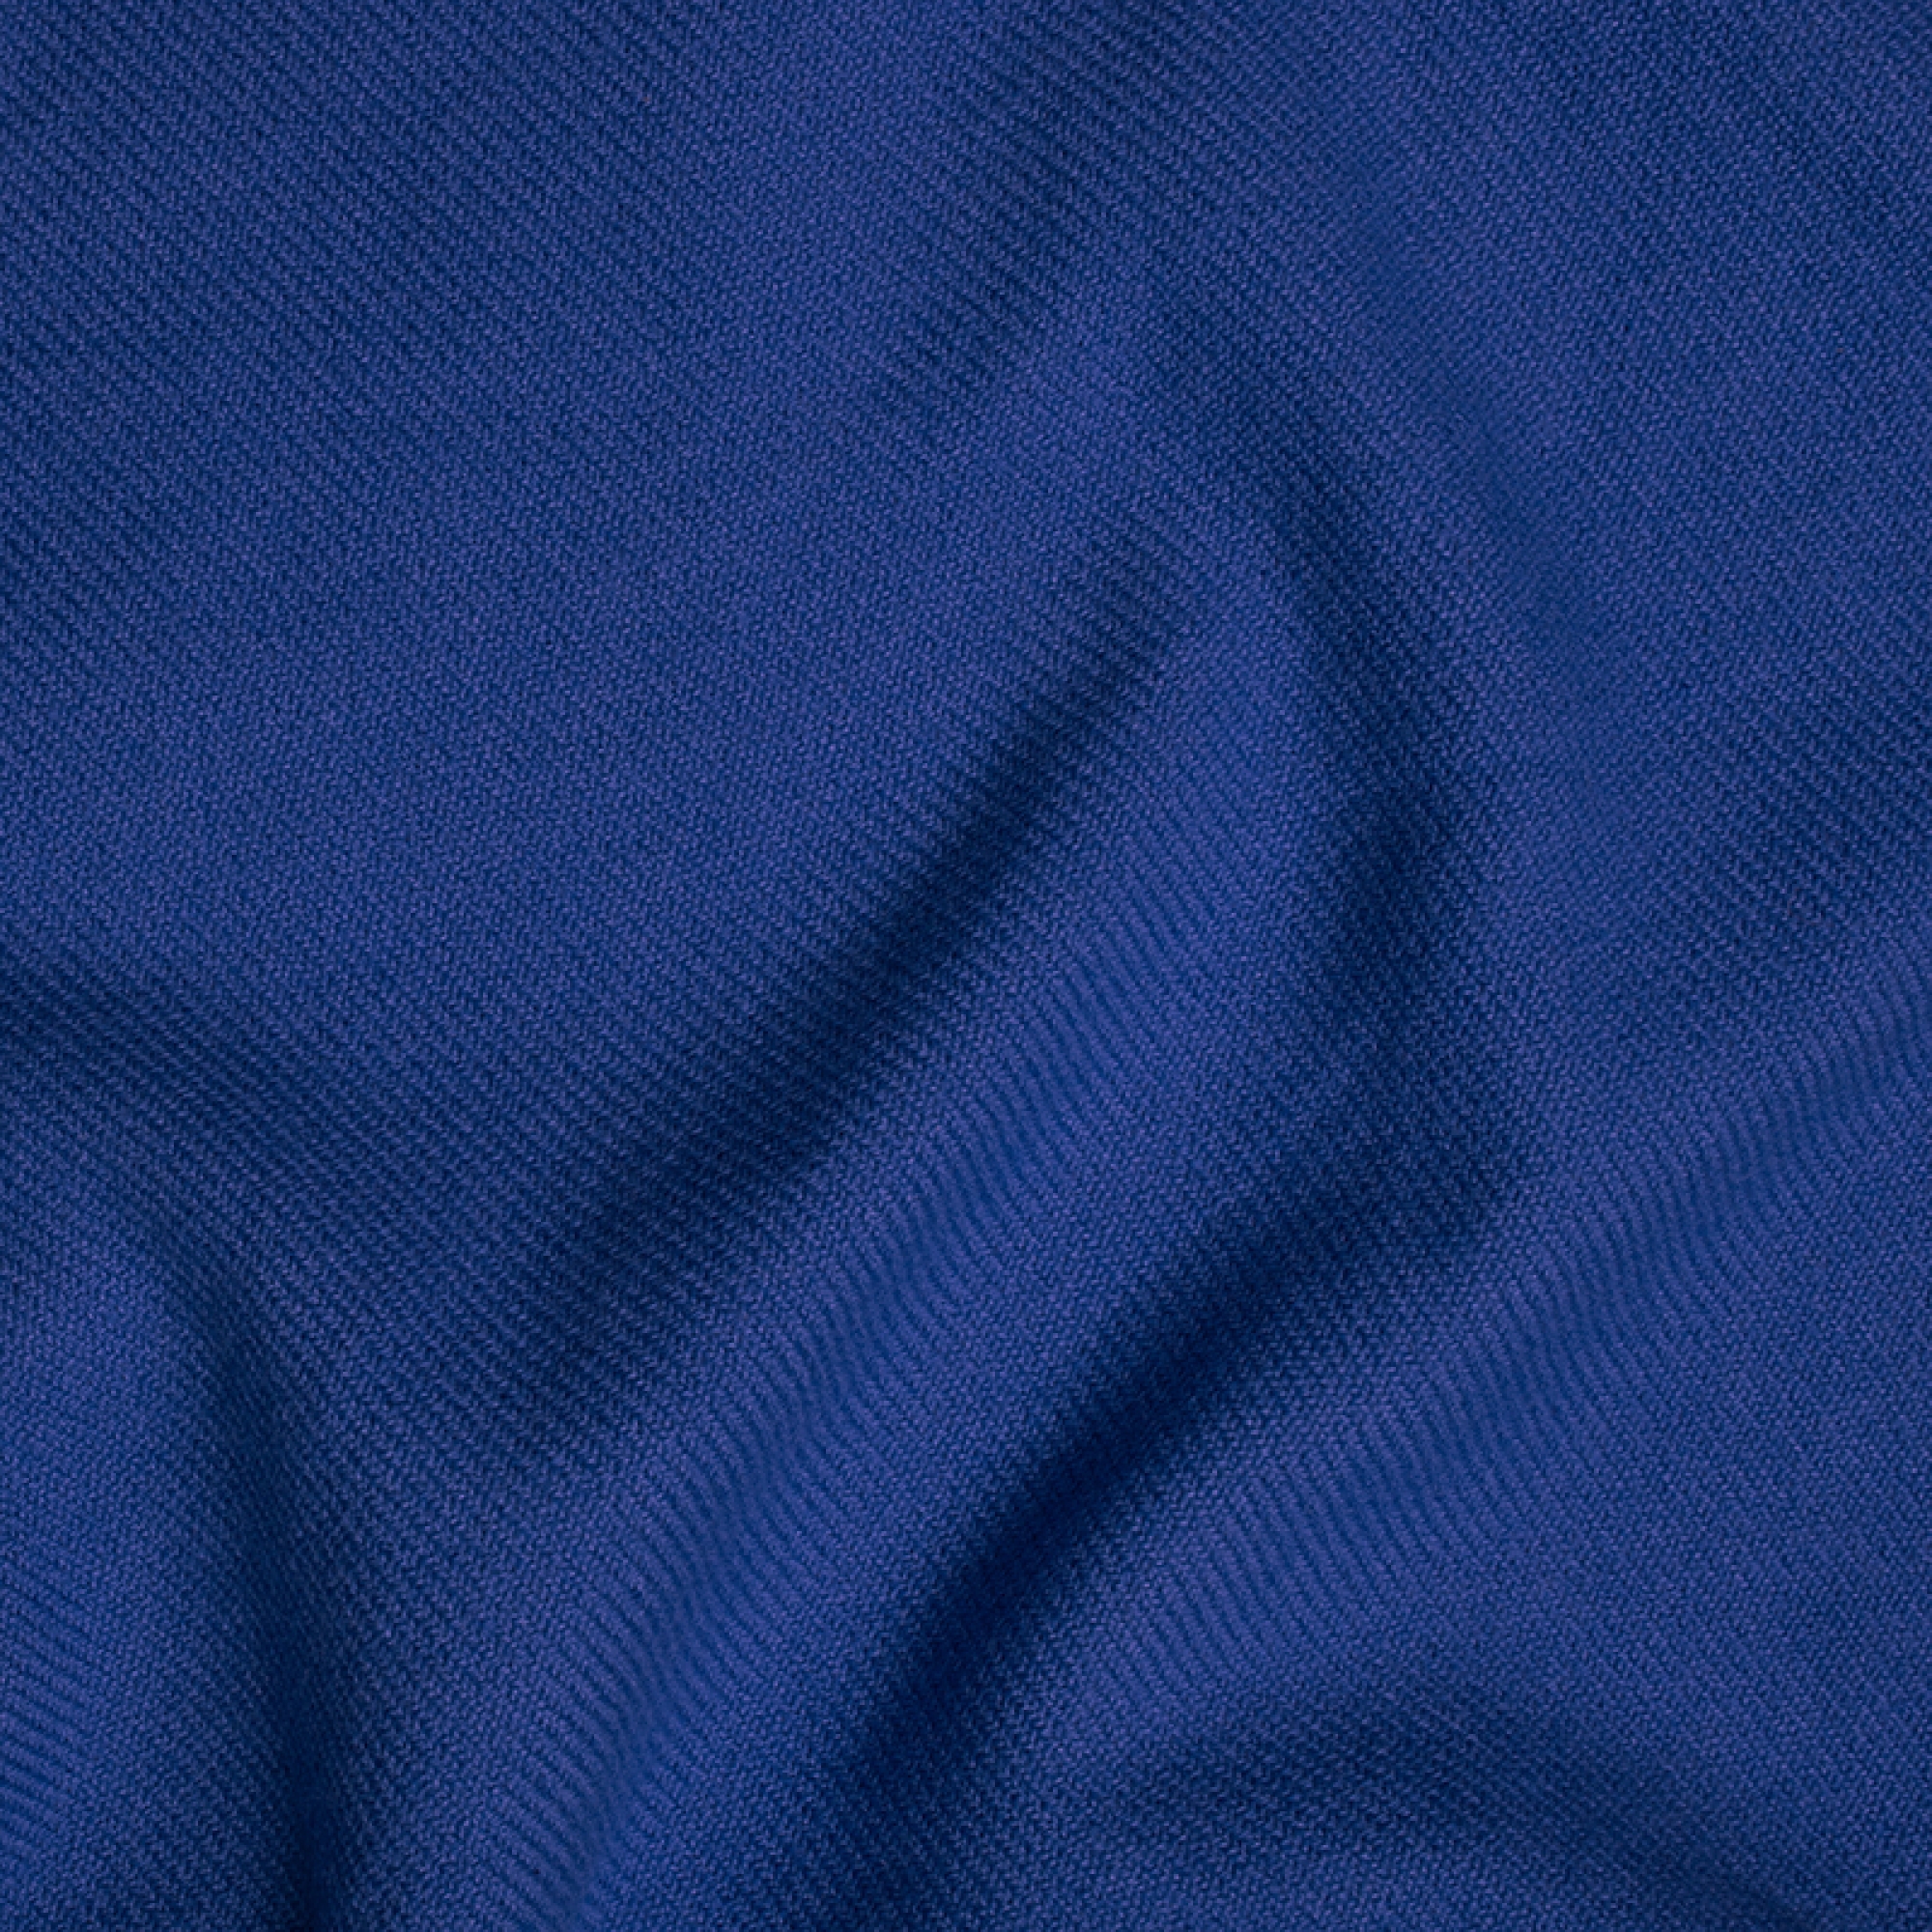 Cashmere accessories cocooning toodoo plain s 140 x 200 light cobalt blue 140 x 200 cm